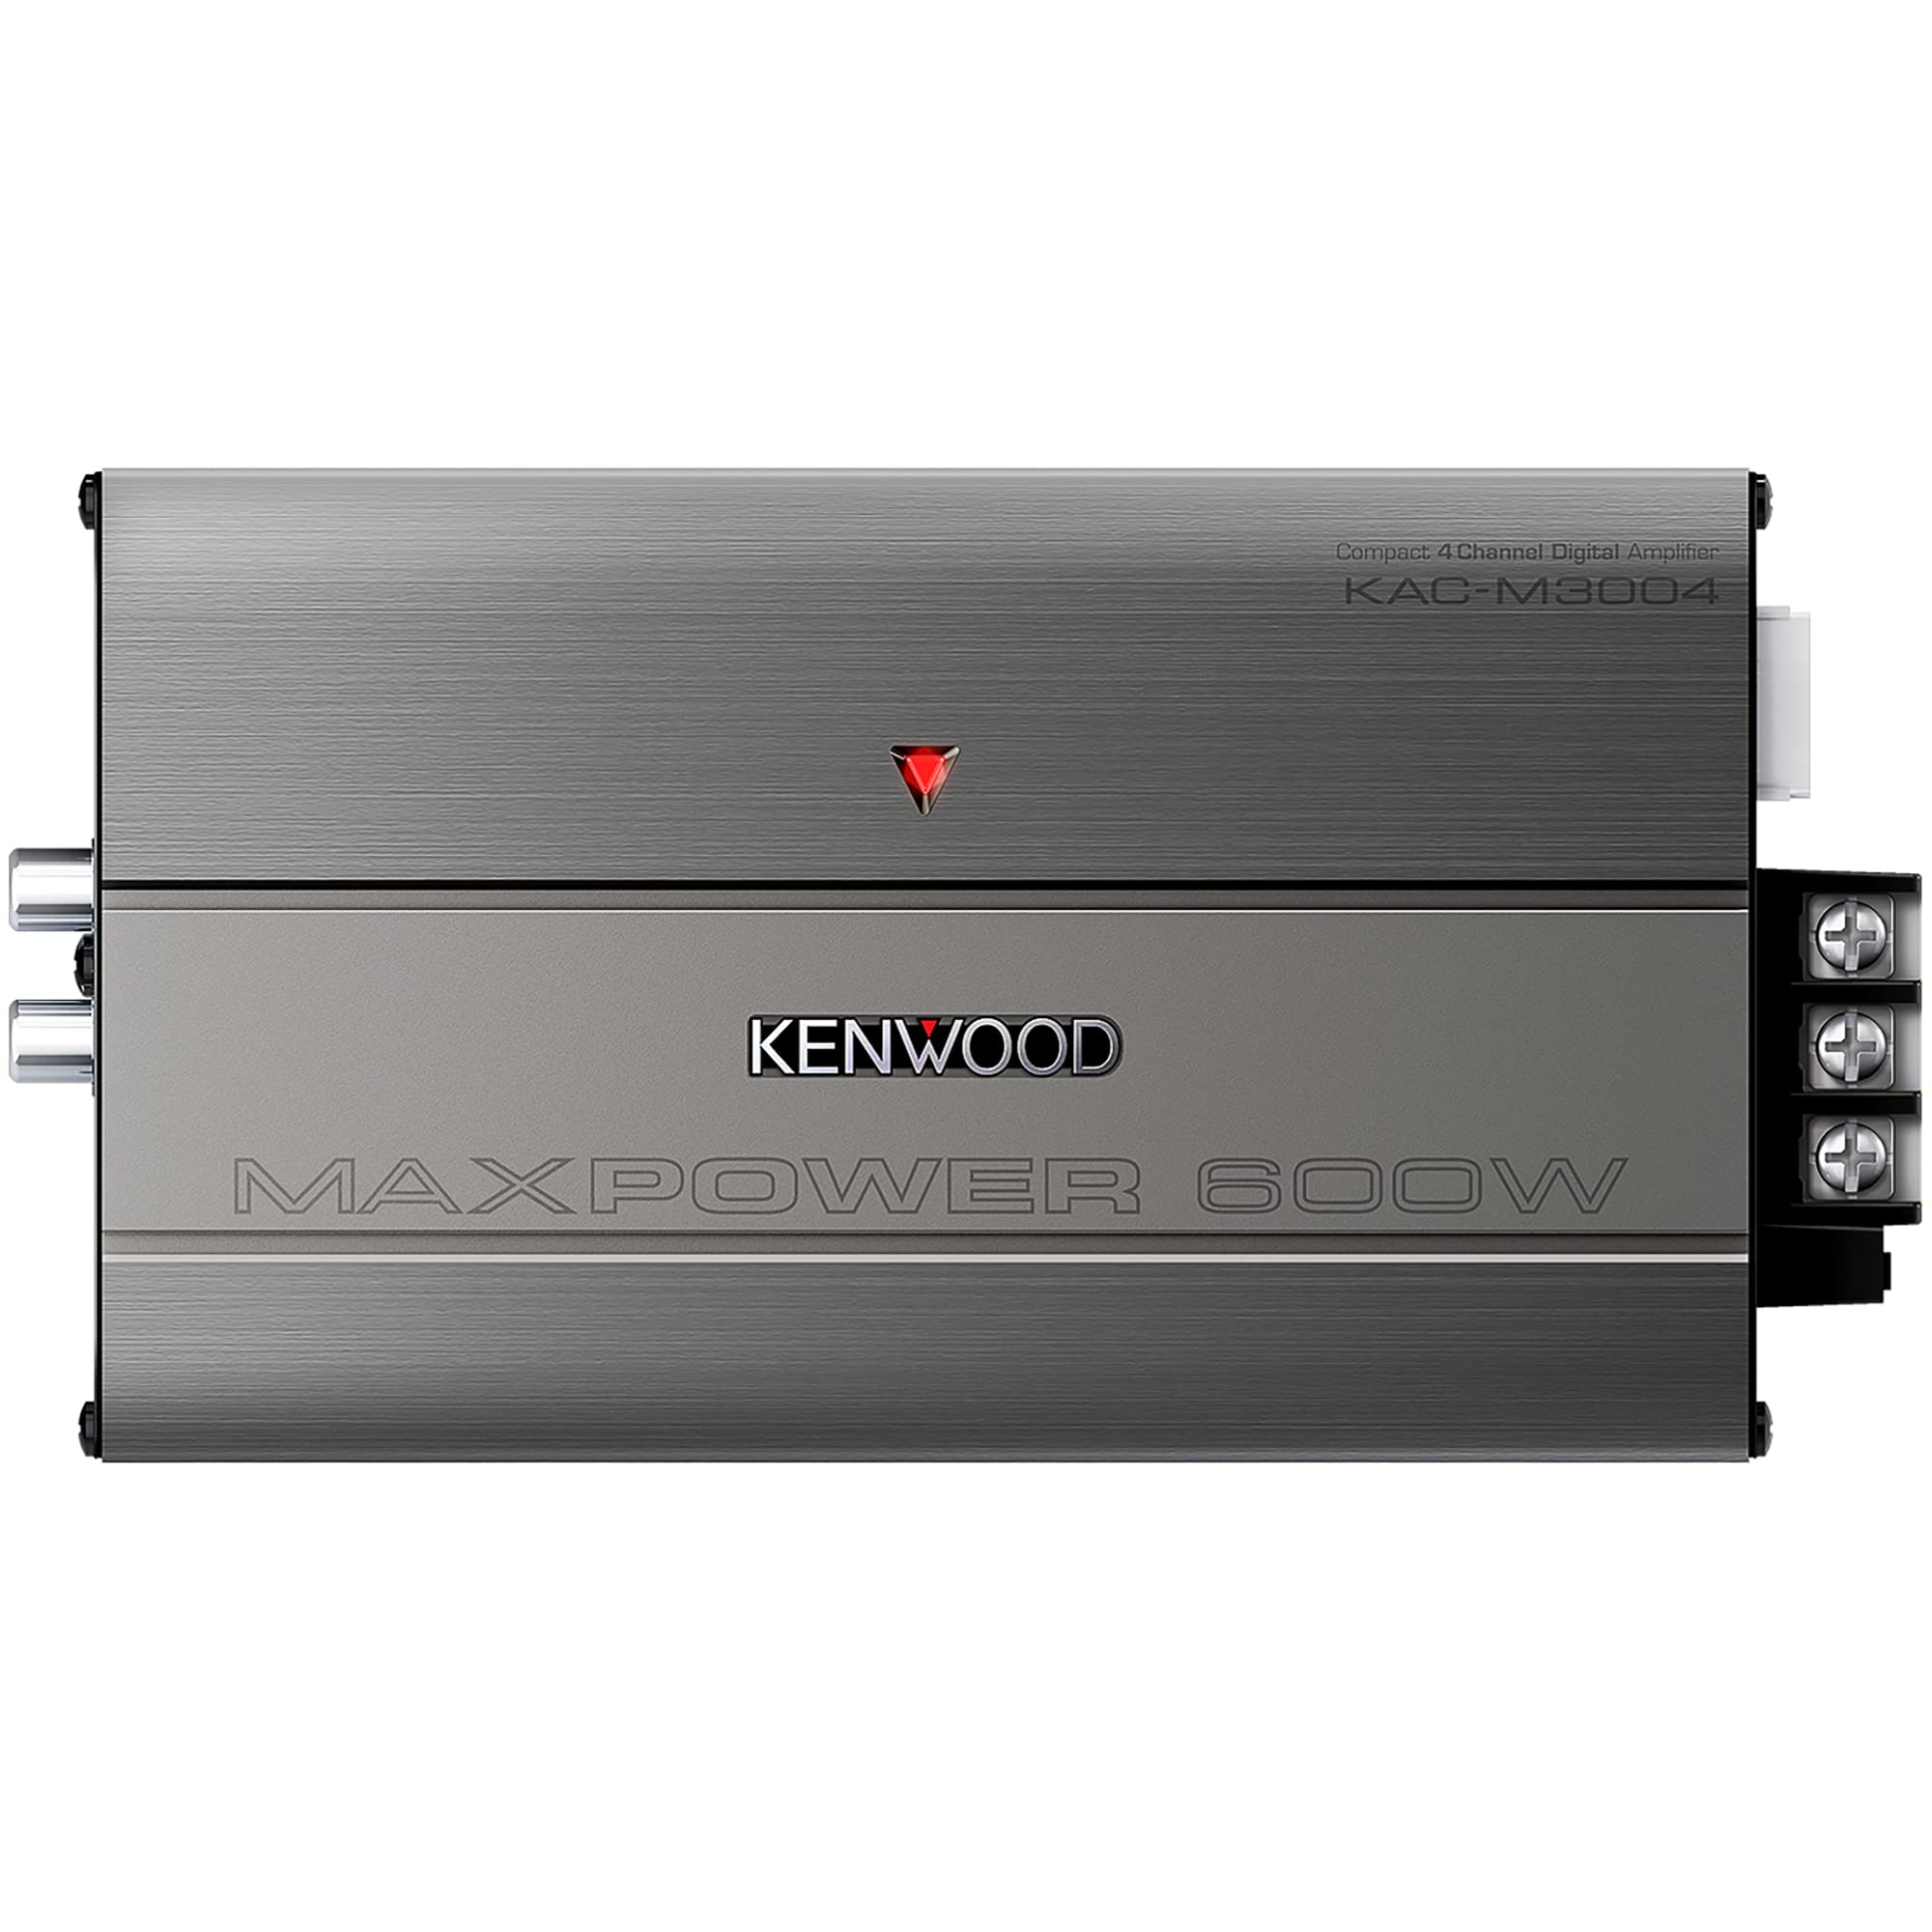 KENWOOD Amplificador digital KAC-M3004 compacto 600 W 4 canais para automóvel/marítimo/esportivos